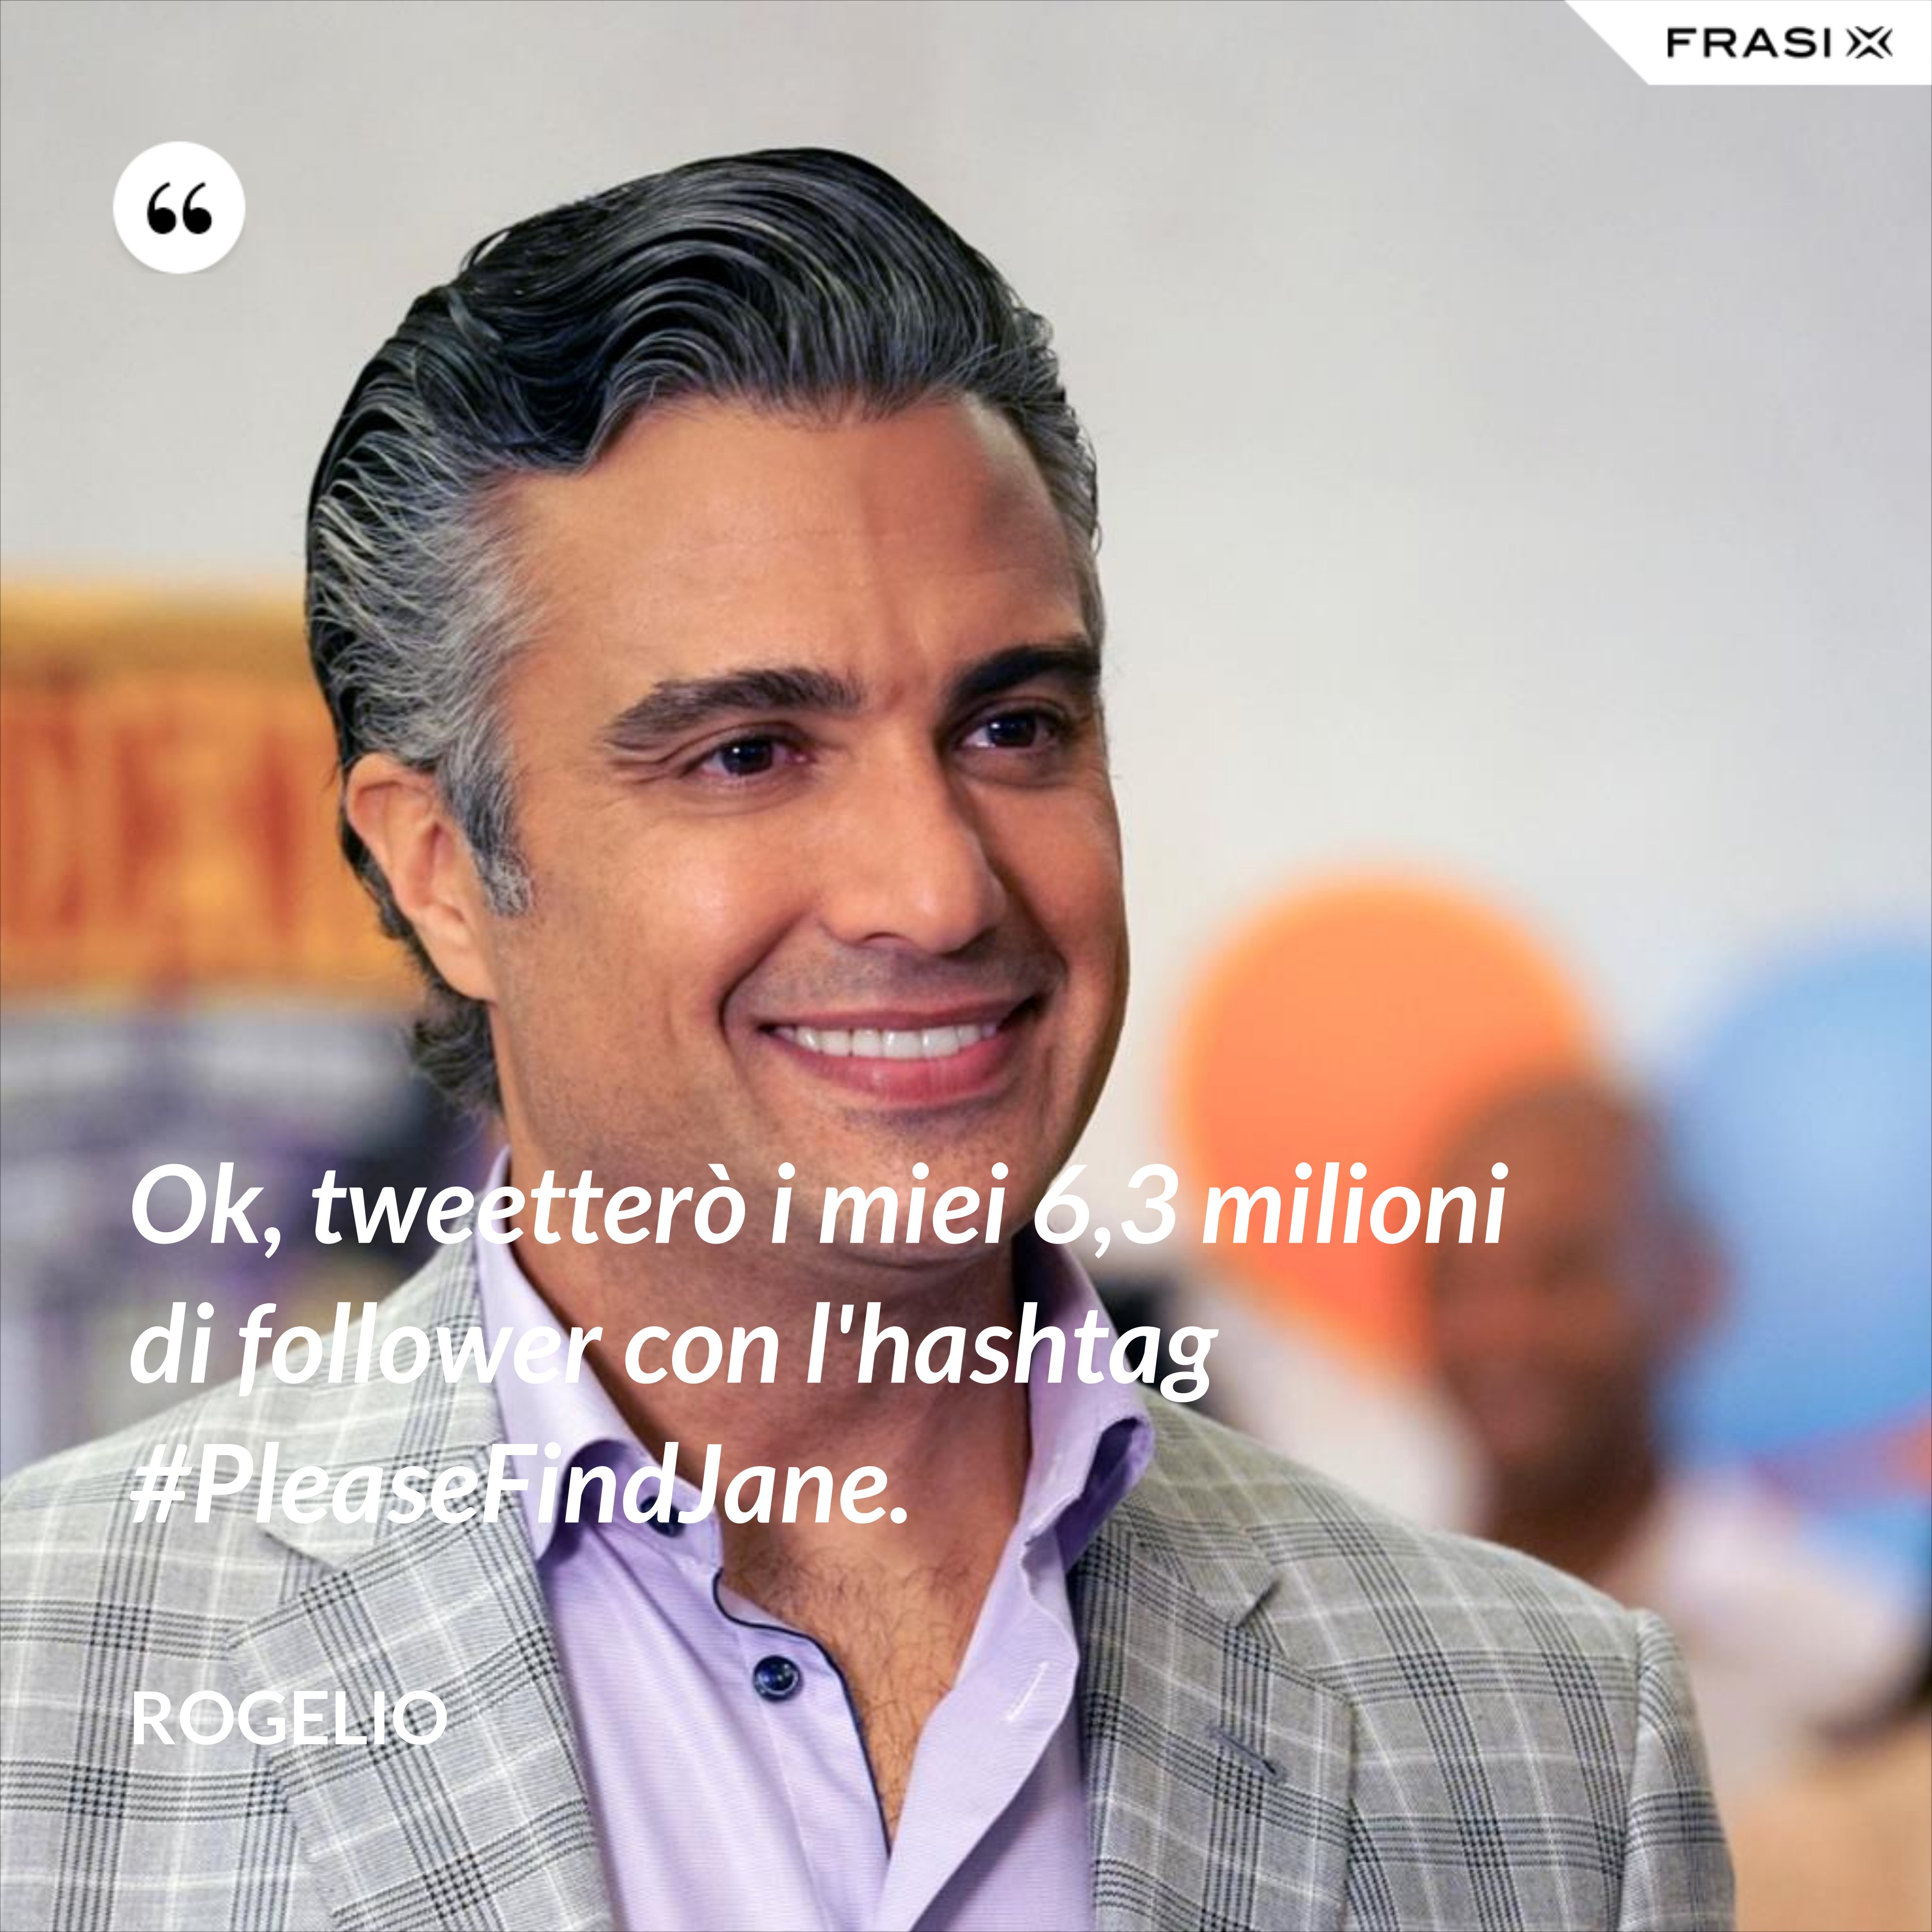 Ok, tweetterò i miei 6,3 milioni di follower con l'hashtag #PleaseFindJane. - Rogelio